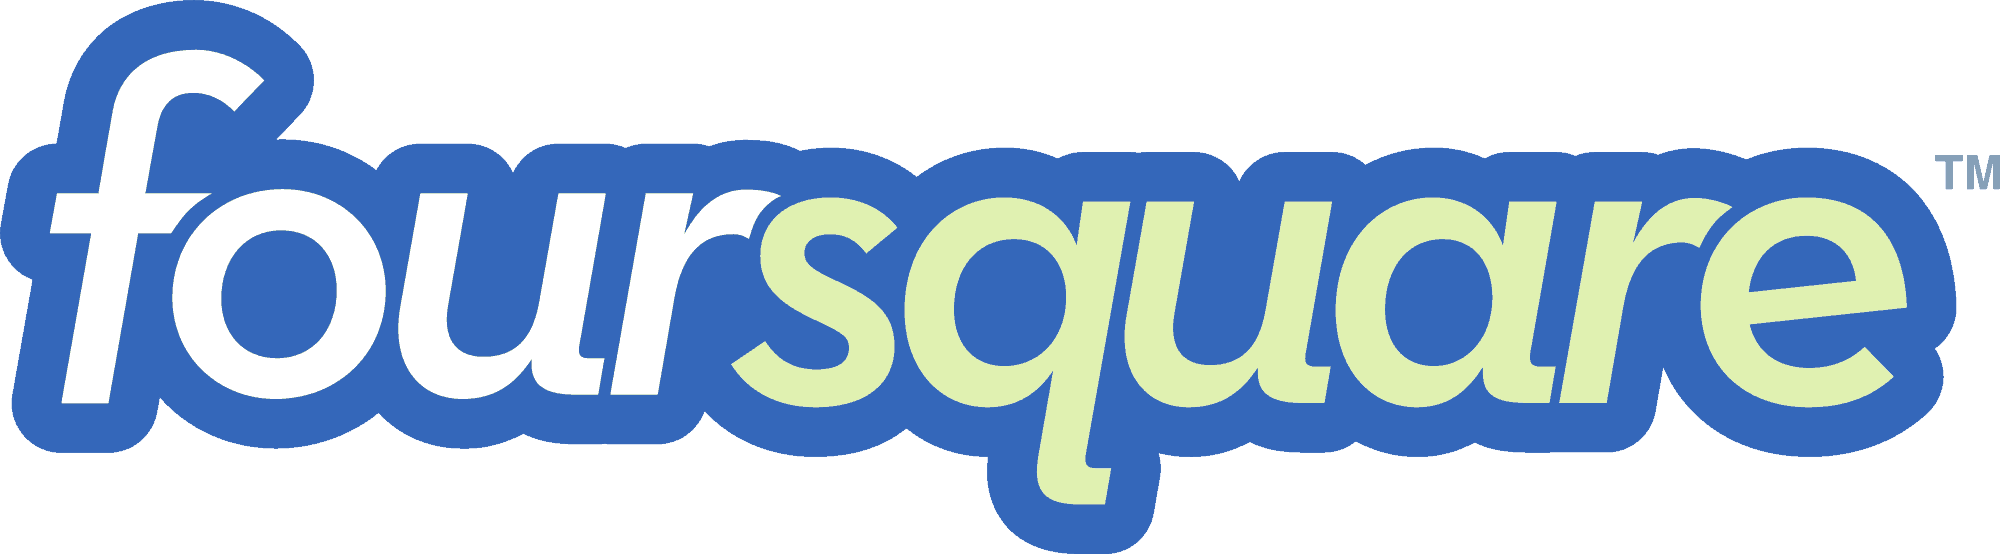 Foursquarelogo Logo - The FourSquare Logo